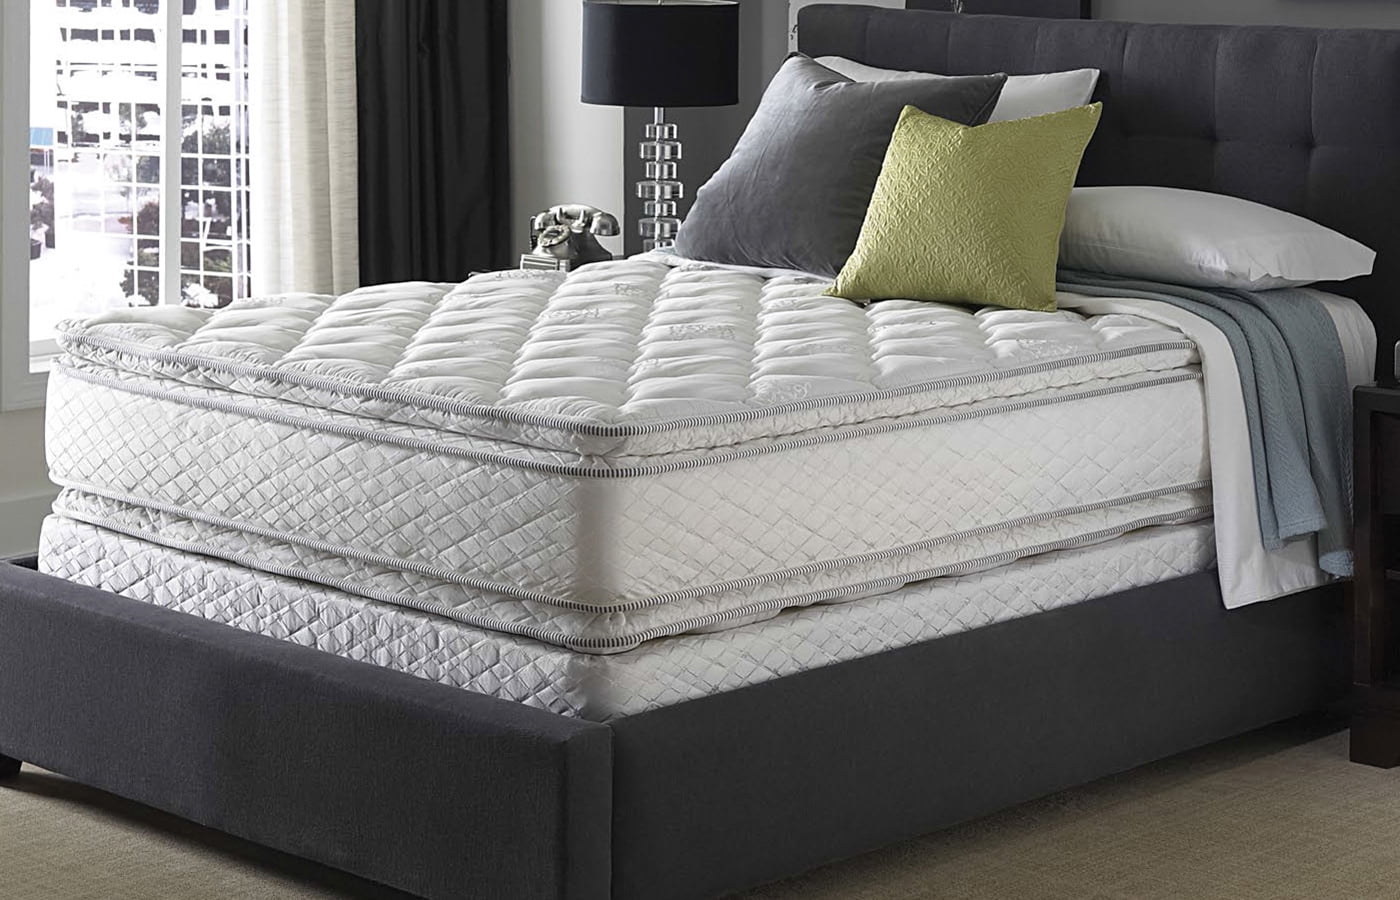 2 sided mattress reviews